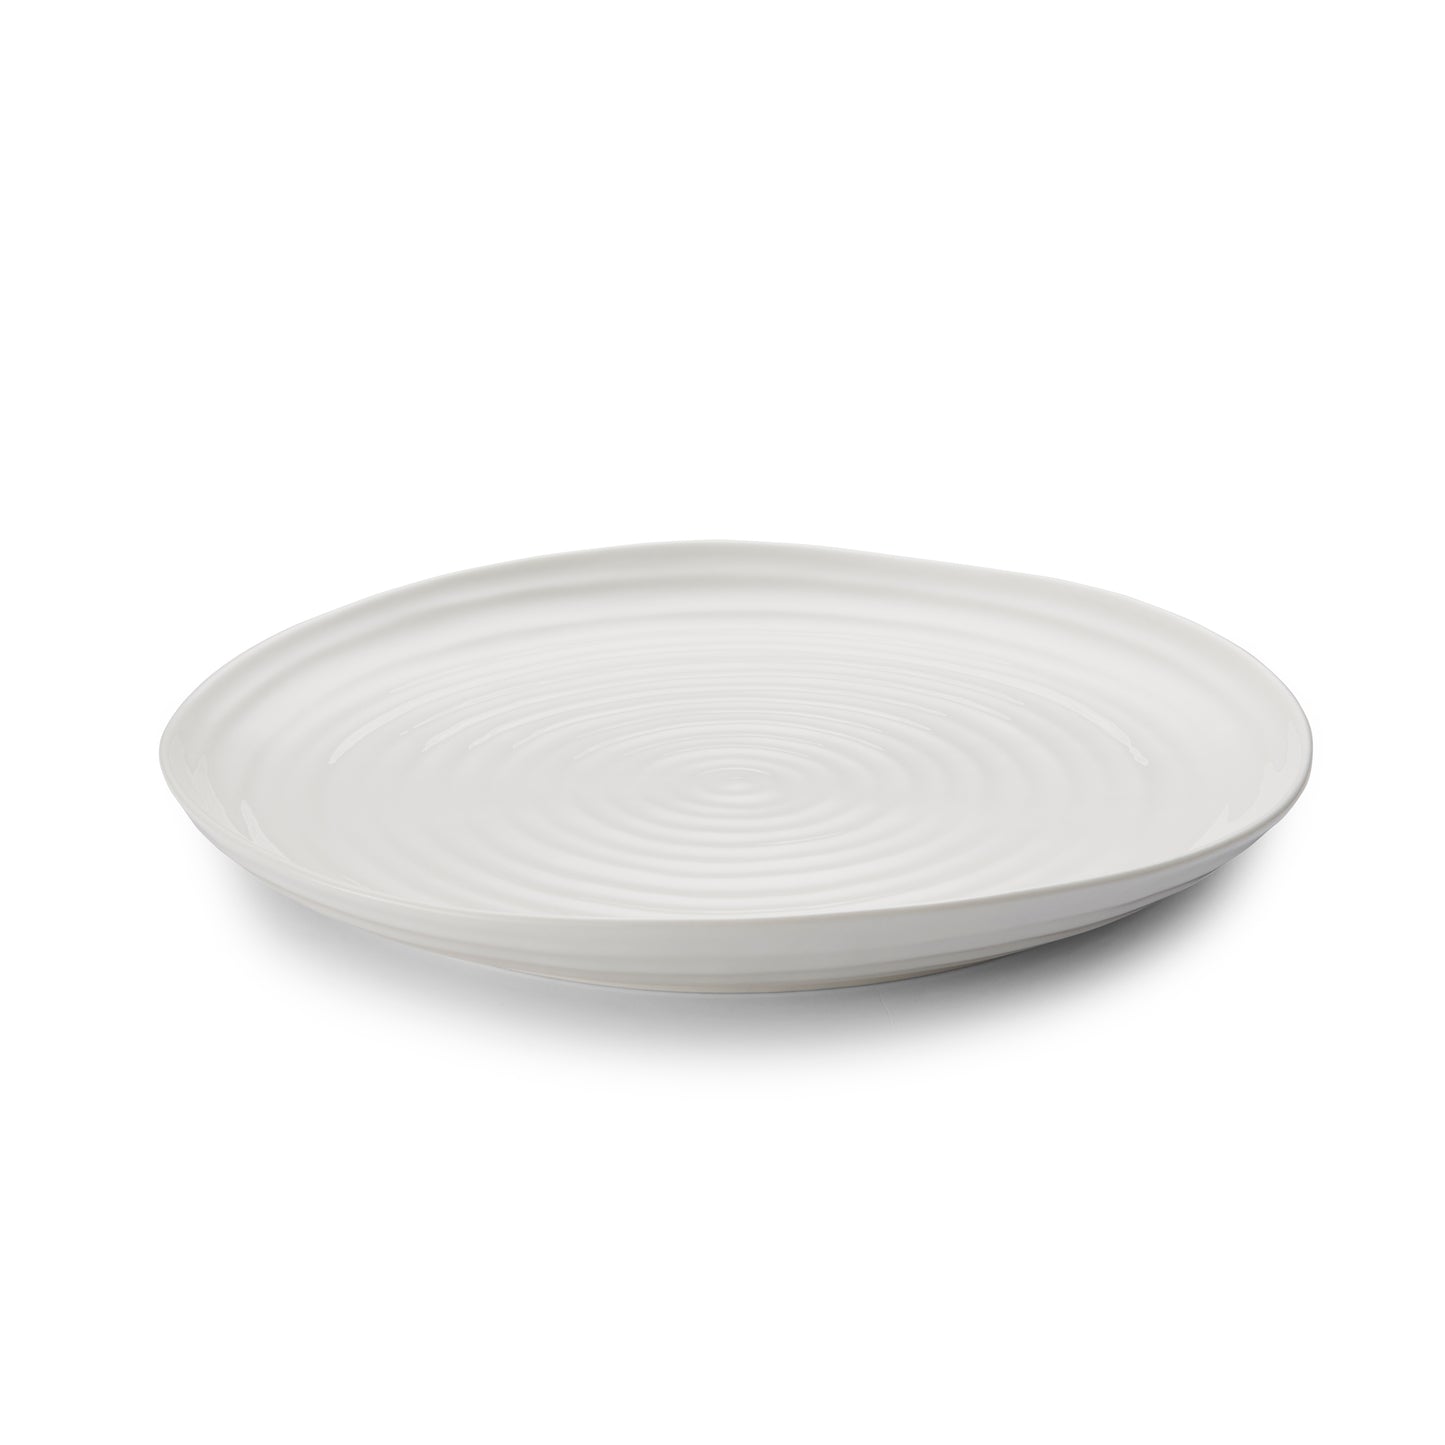 Sophie Conran for Portmeirion White Round Platter 30.5cm